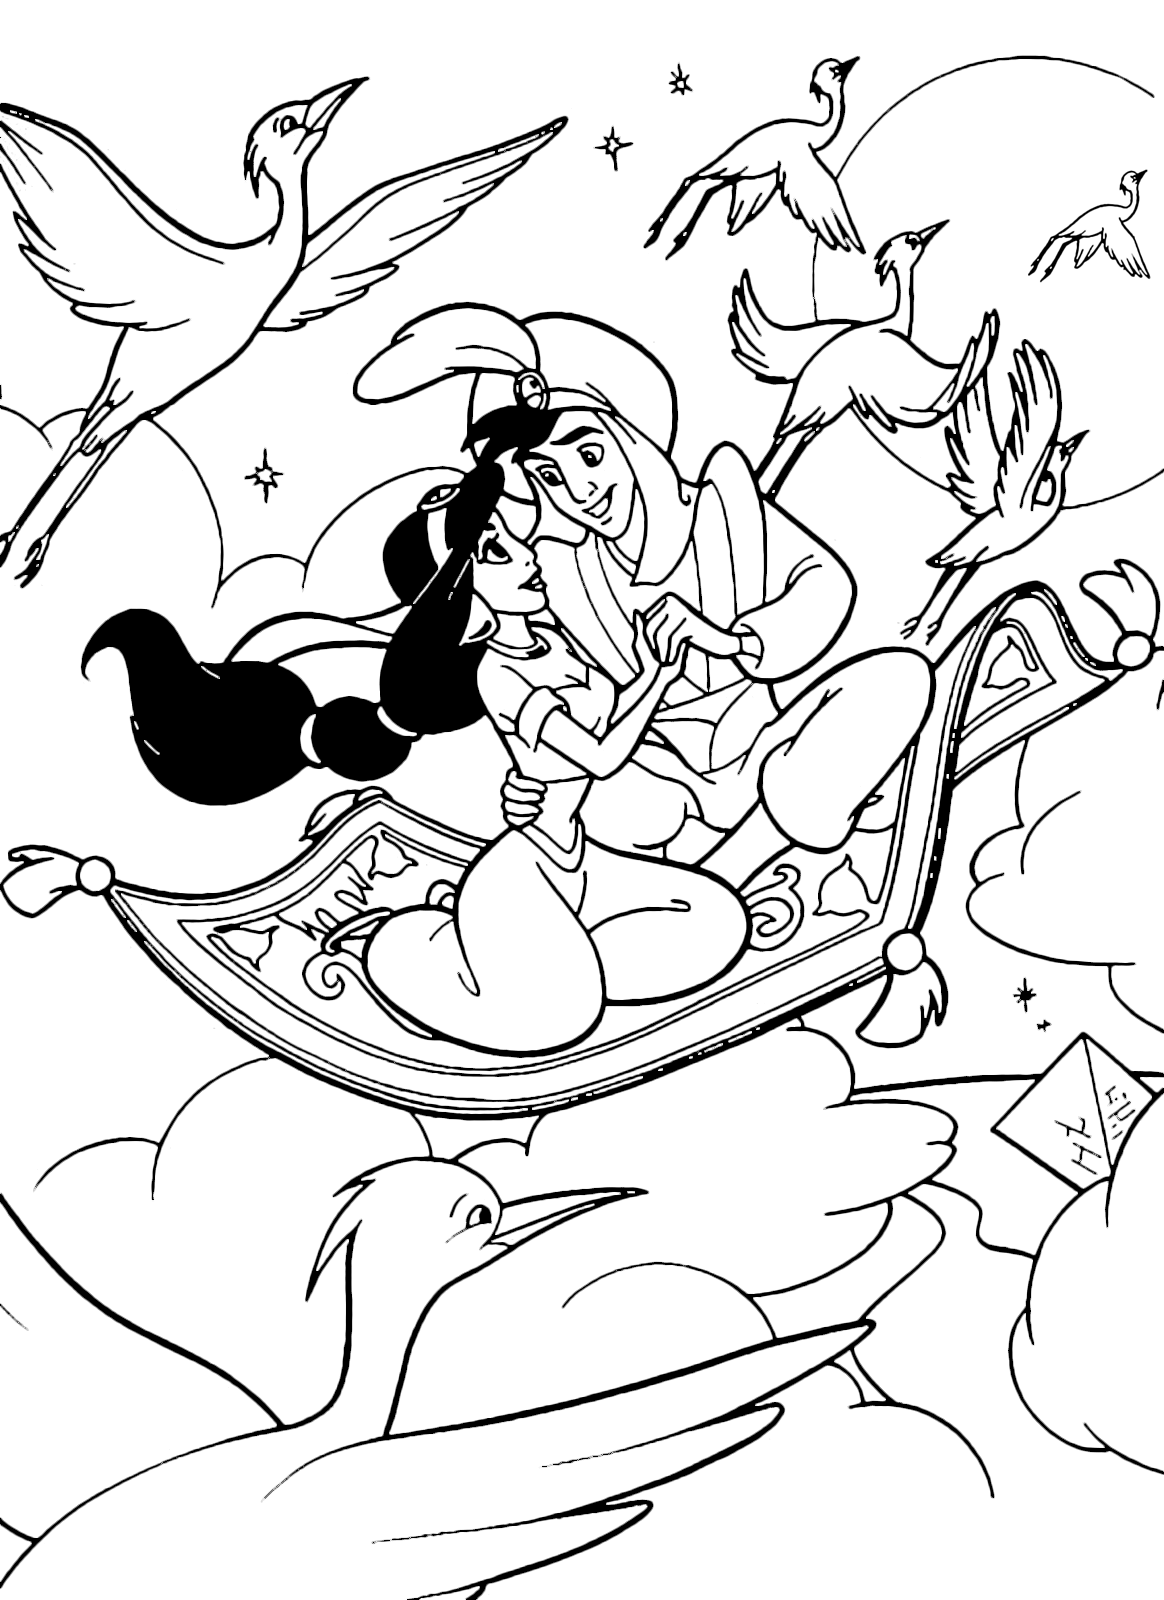 Aladdin - Jasmine and Aladdin fly happily among the birds